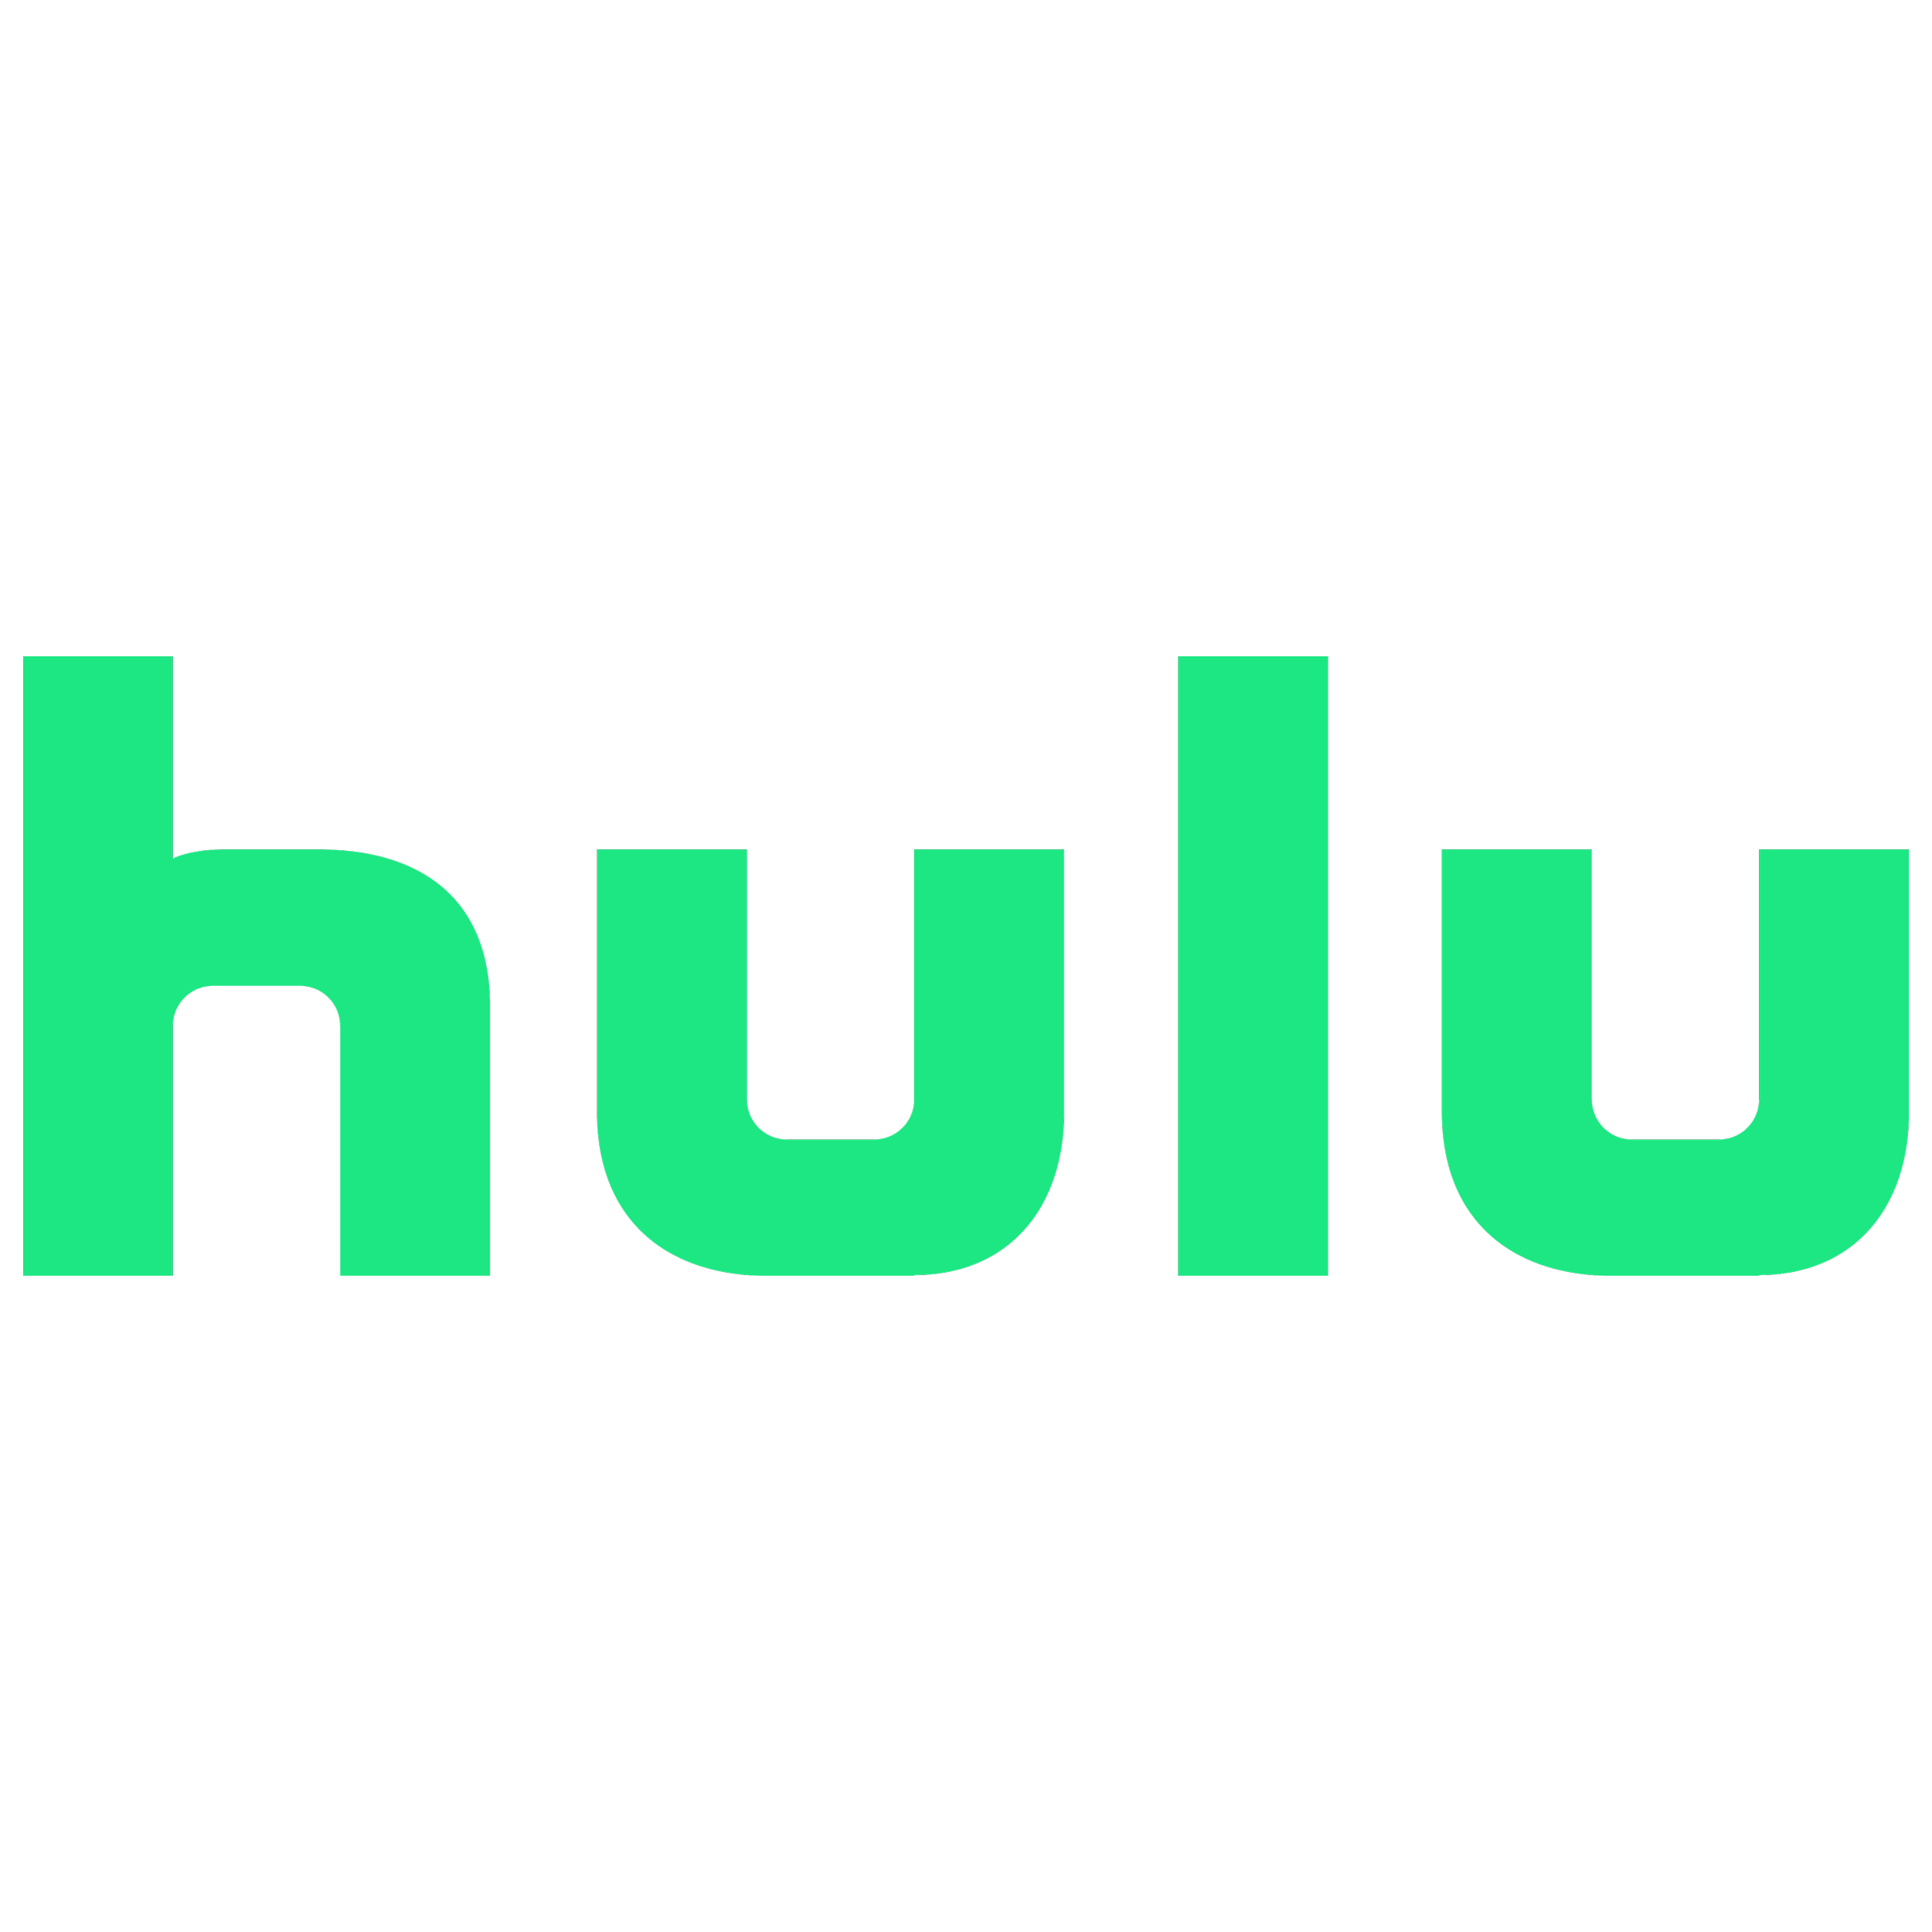 Hulu_square.png